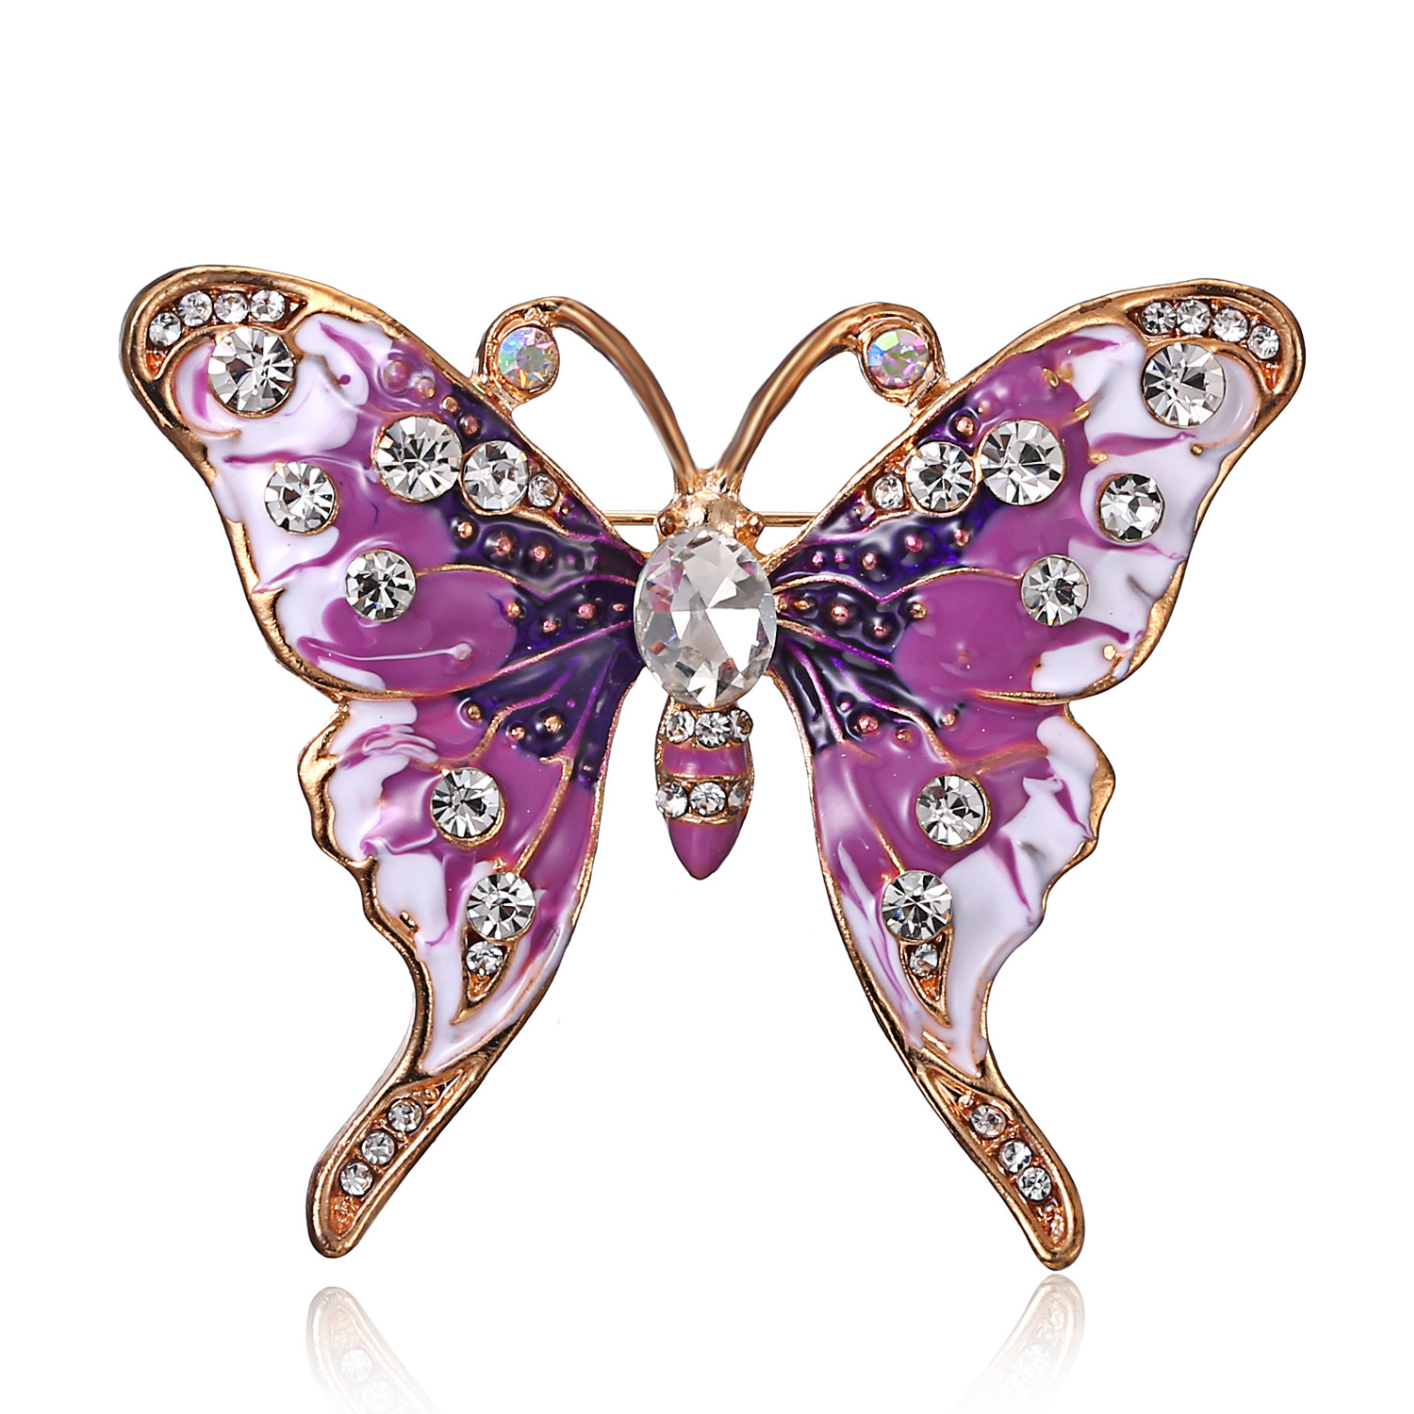 16XZ075B0 crystal rhinestone butterfly brooch Pin butterfly brooch for female girl wedding/banquet/birthday party